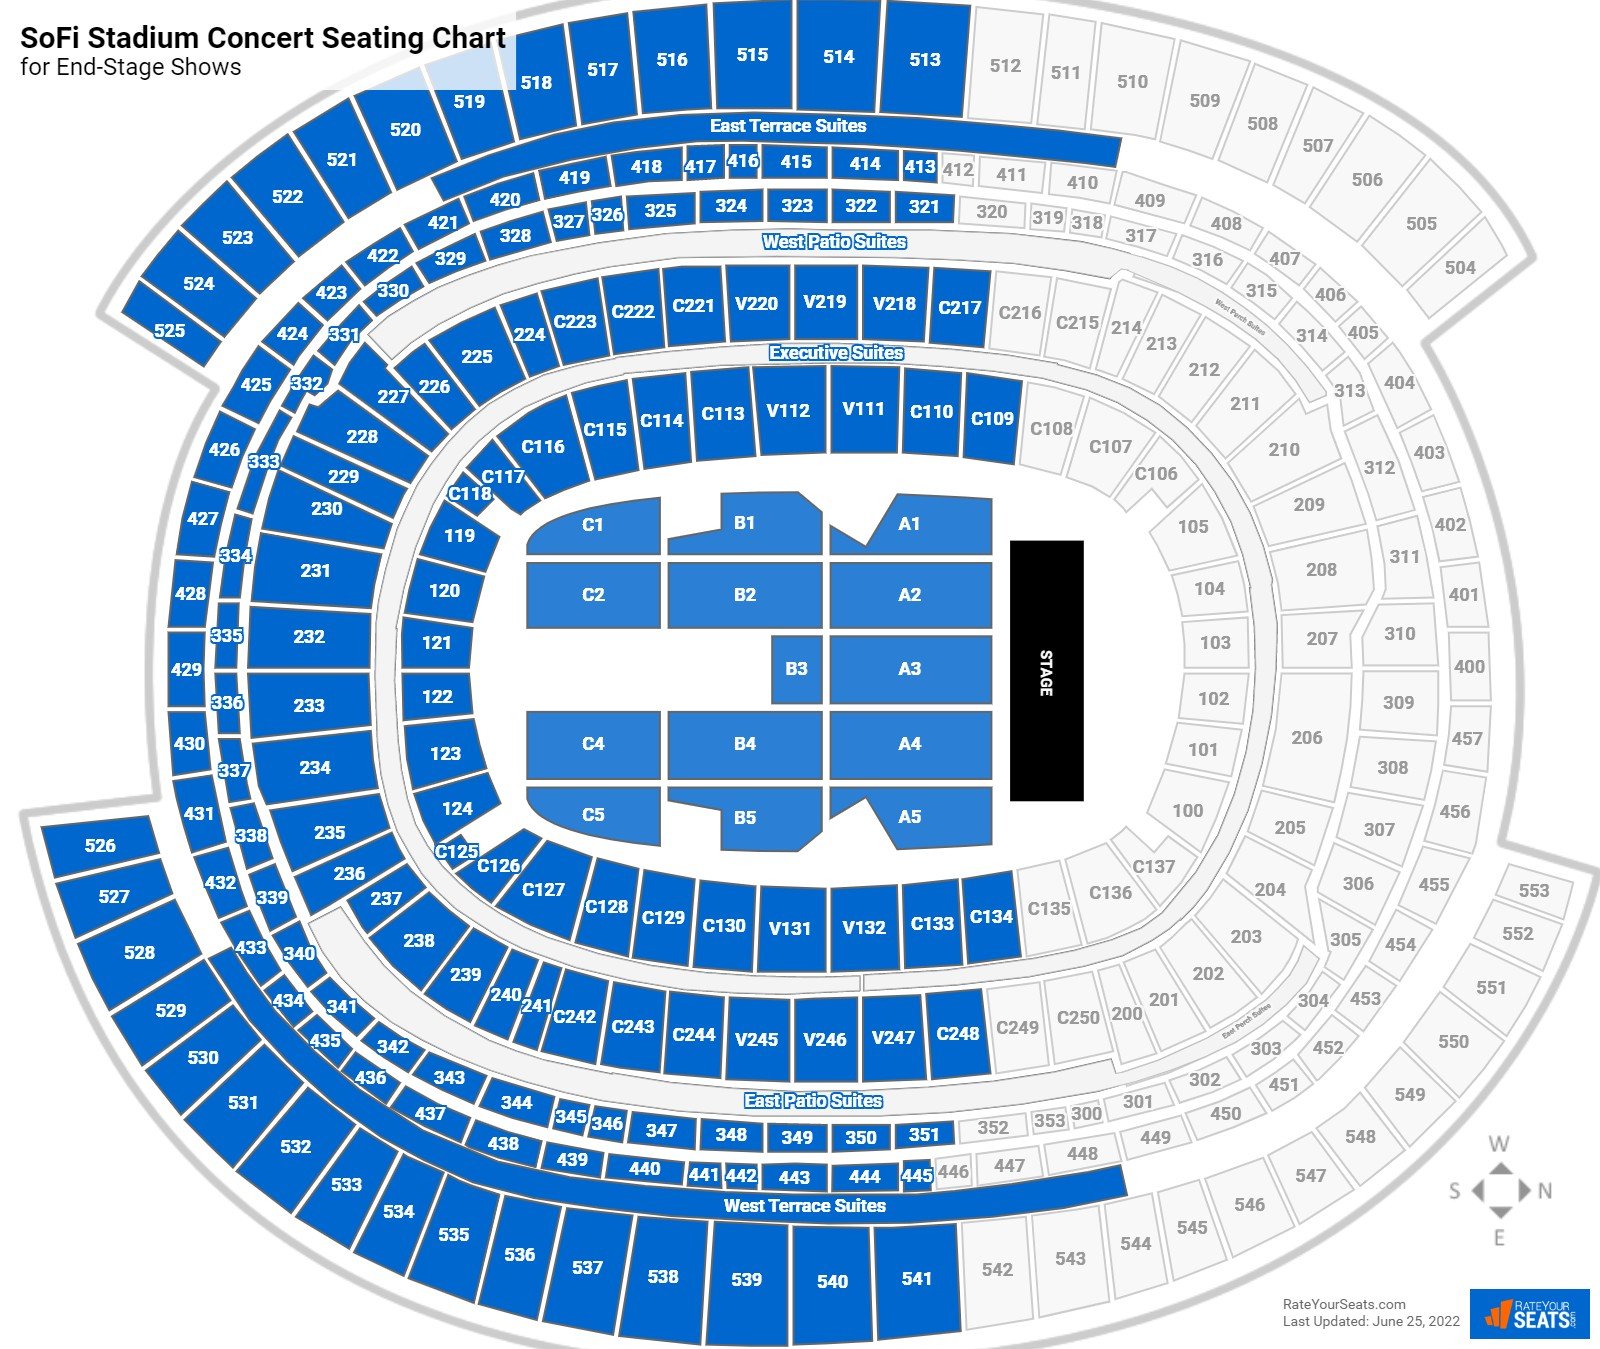 SoFi Stadium Concert Seating Chart